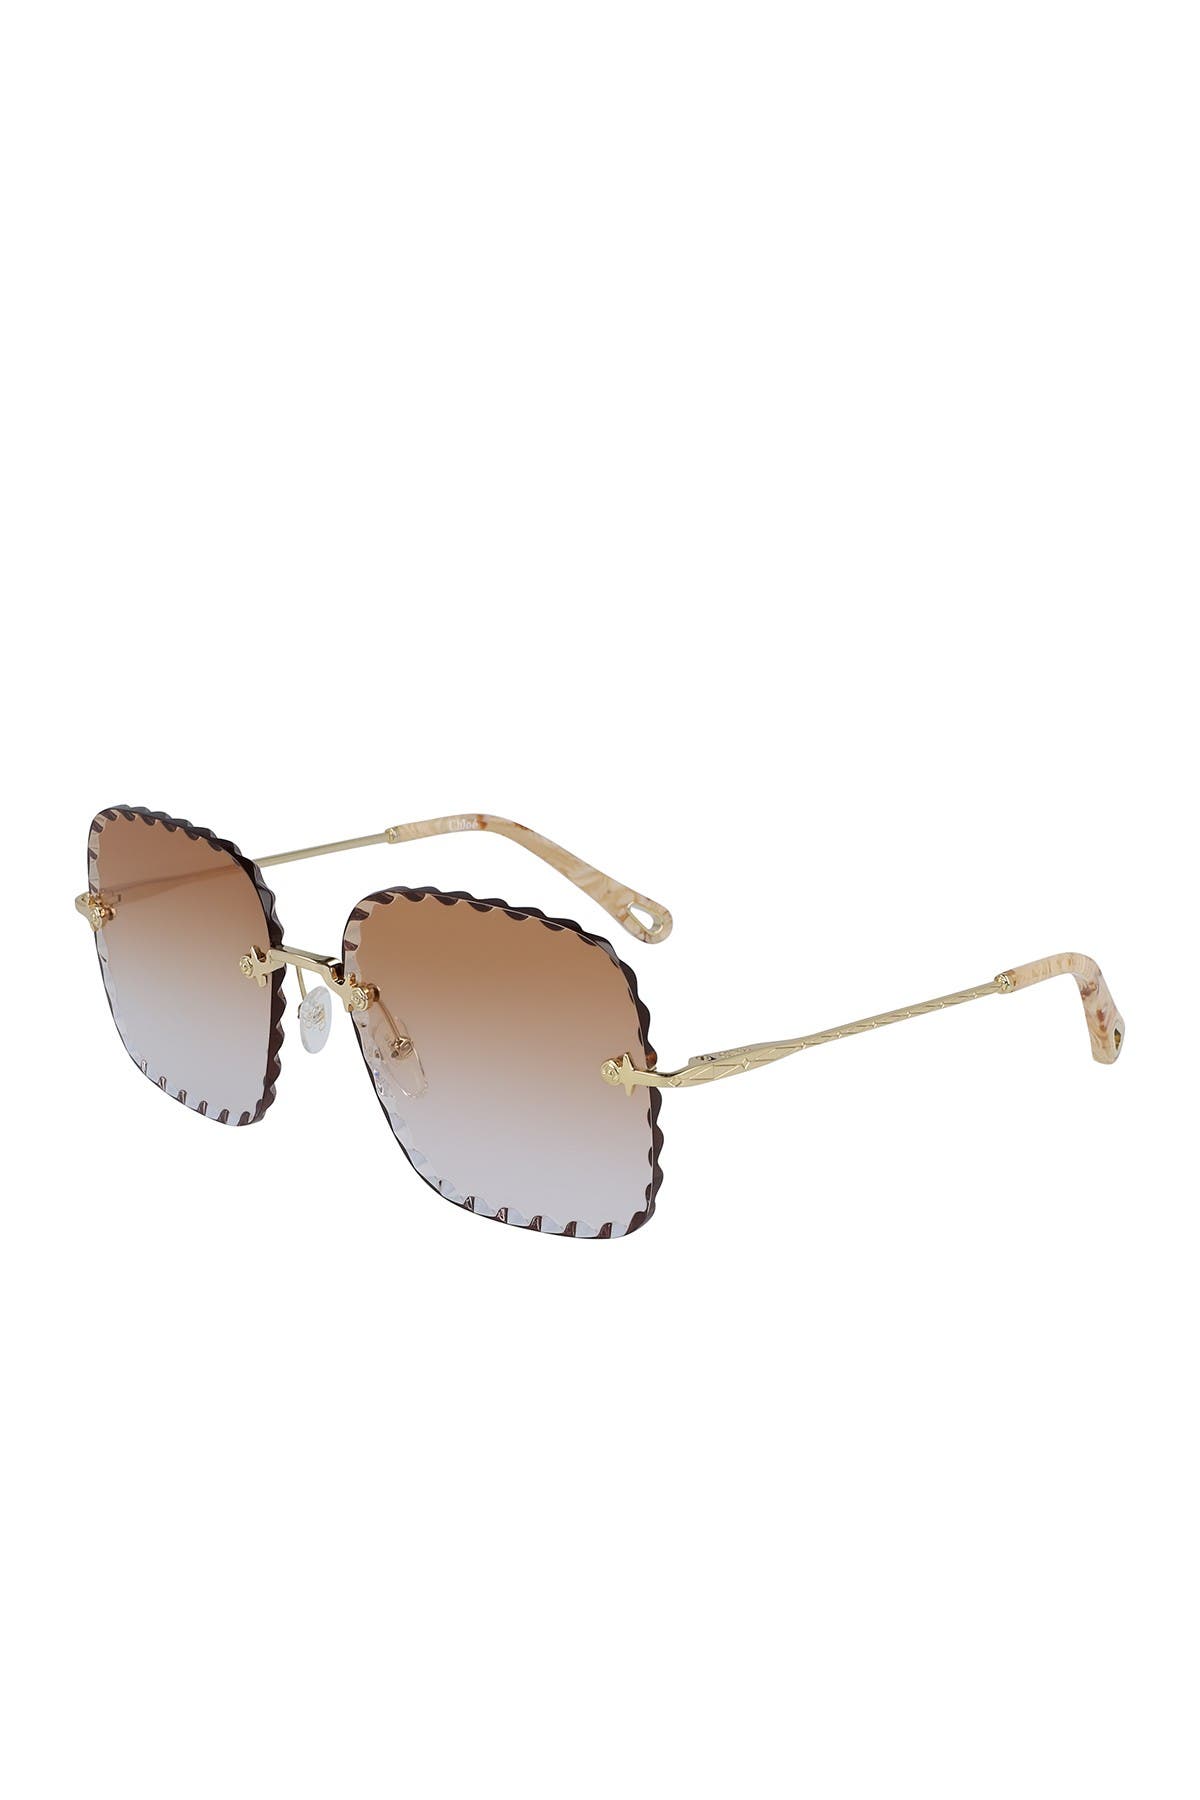 Chloé Rosie 59mm Square Sunglasses In Gold /gradient Peach